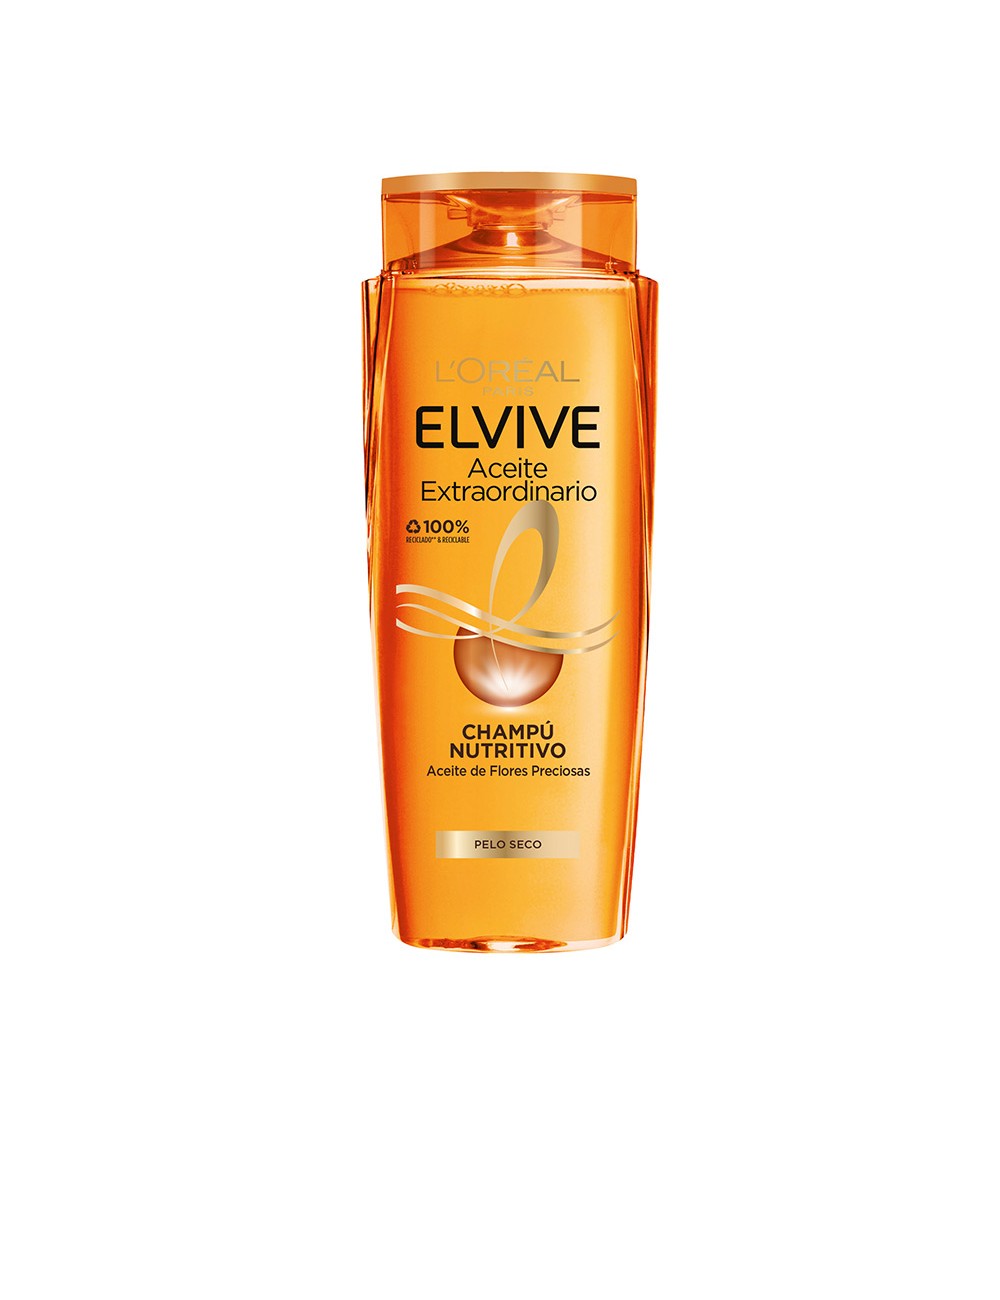 ELVIVE HUILE EXTRAORDINAIRE shampooing nourrissant 700 ml